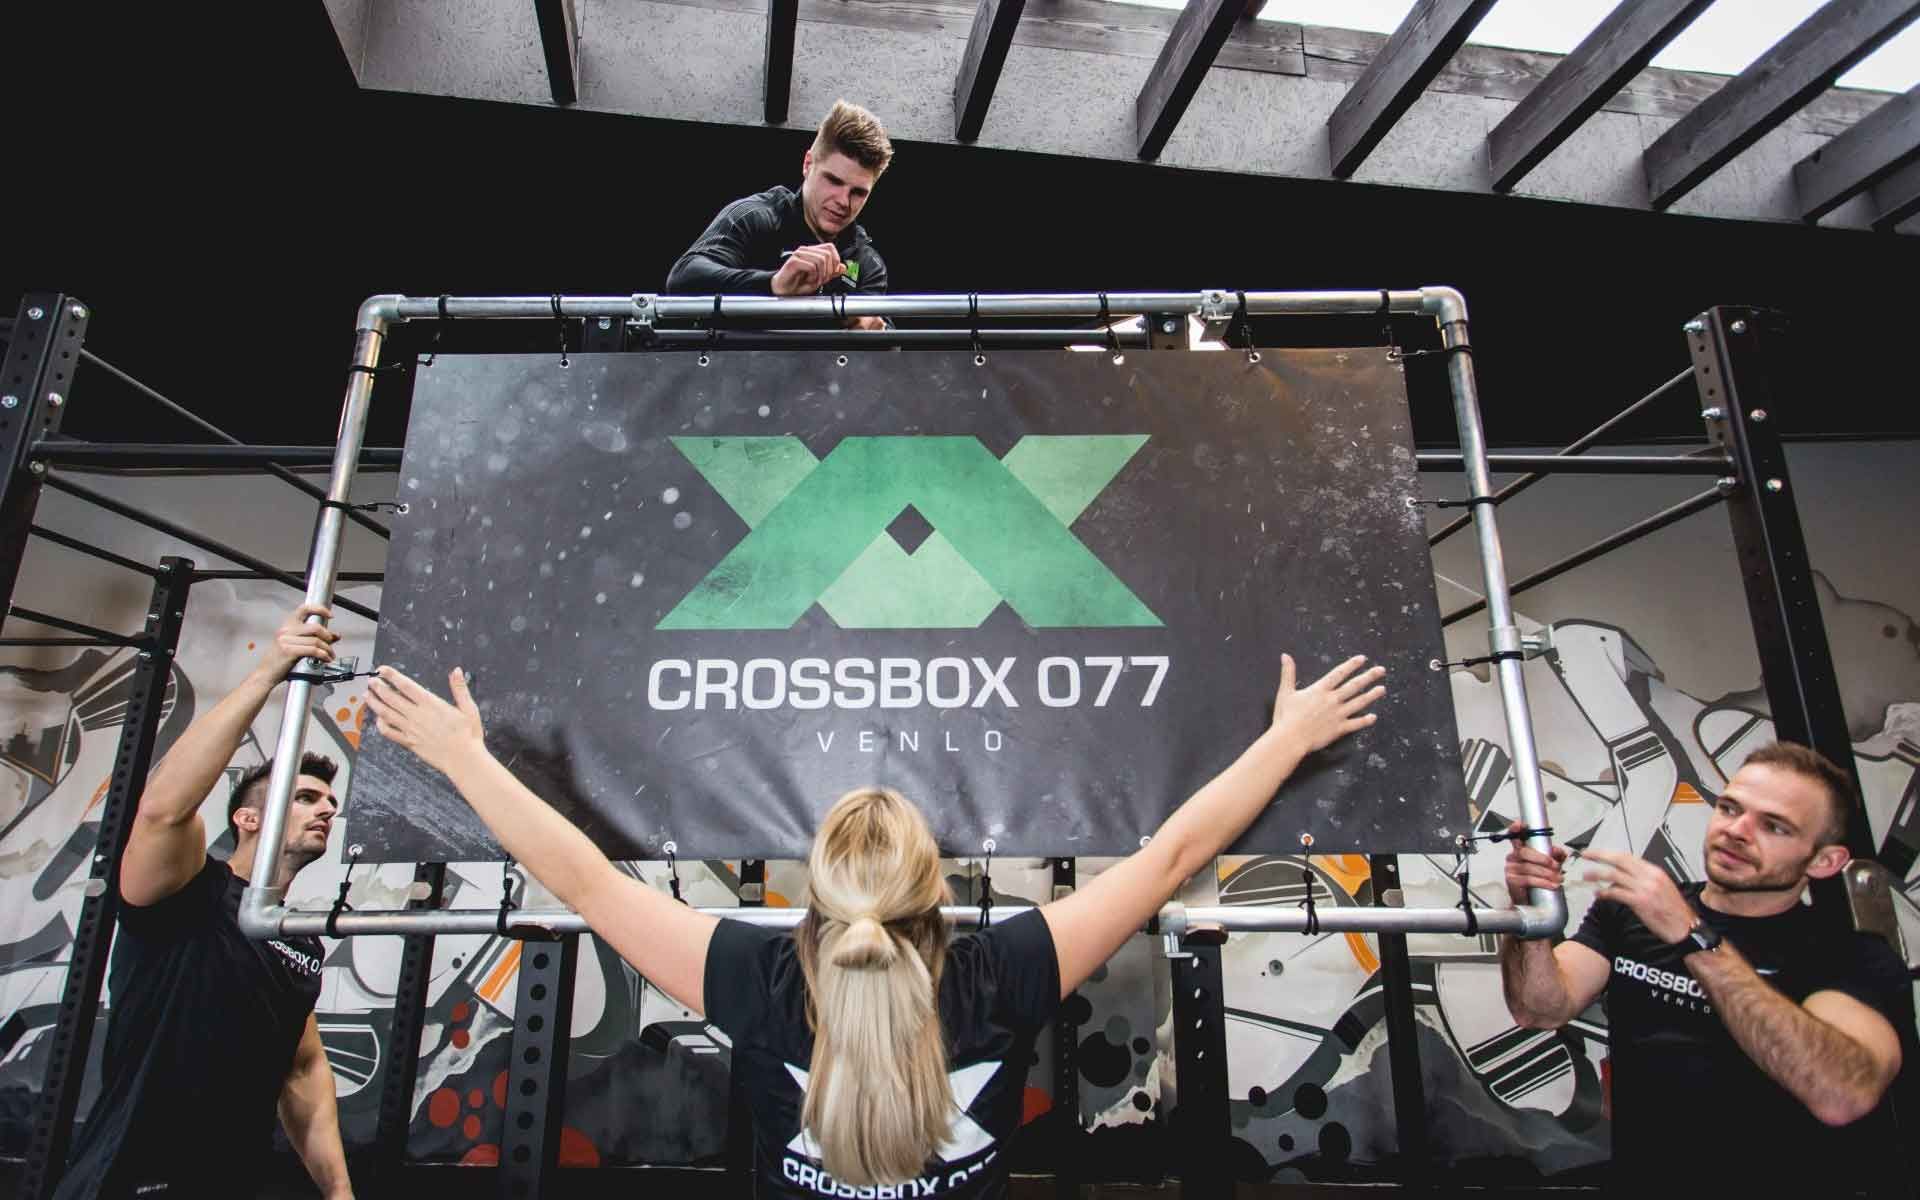 Crossbox077